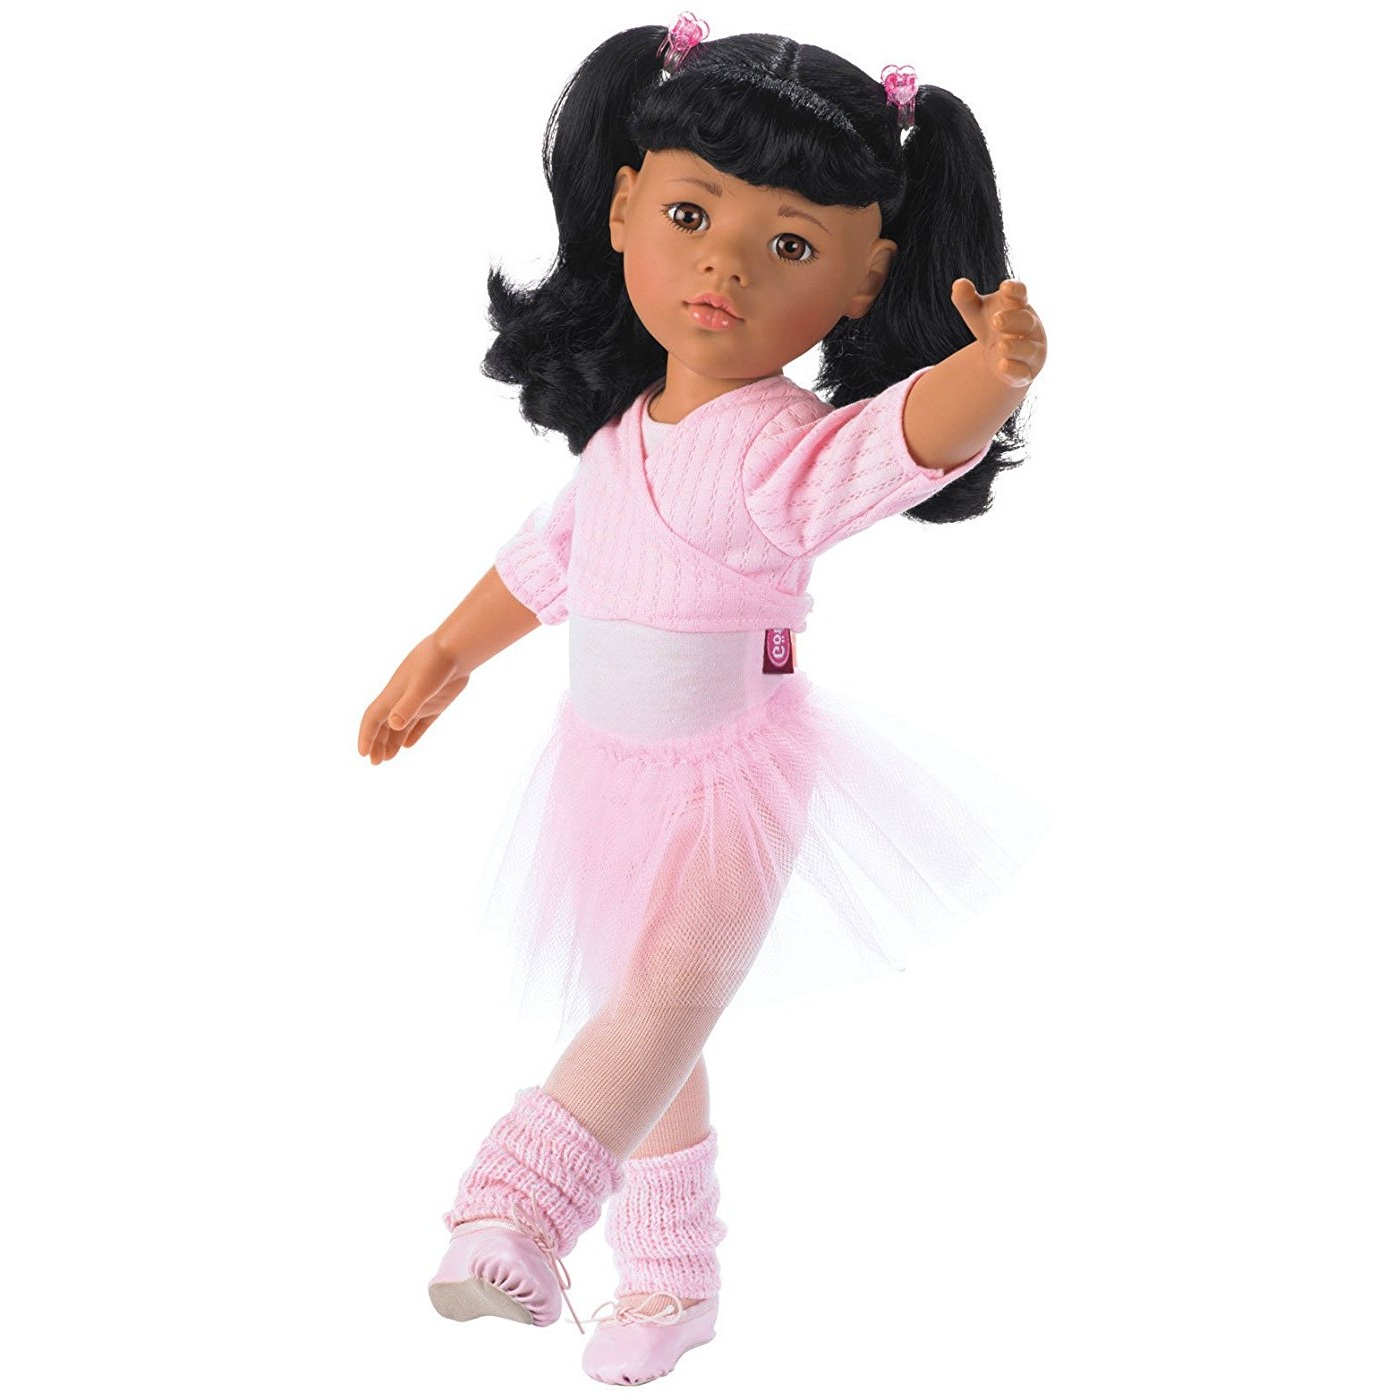 Купить куклу 50 см. Кукла Gotz Ханна балерина, 50 см. Кукла Готц Ханна. Куклы Gotz балерины. Кукла Готц Ханна балерина.